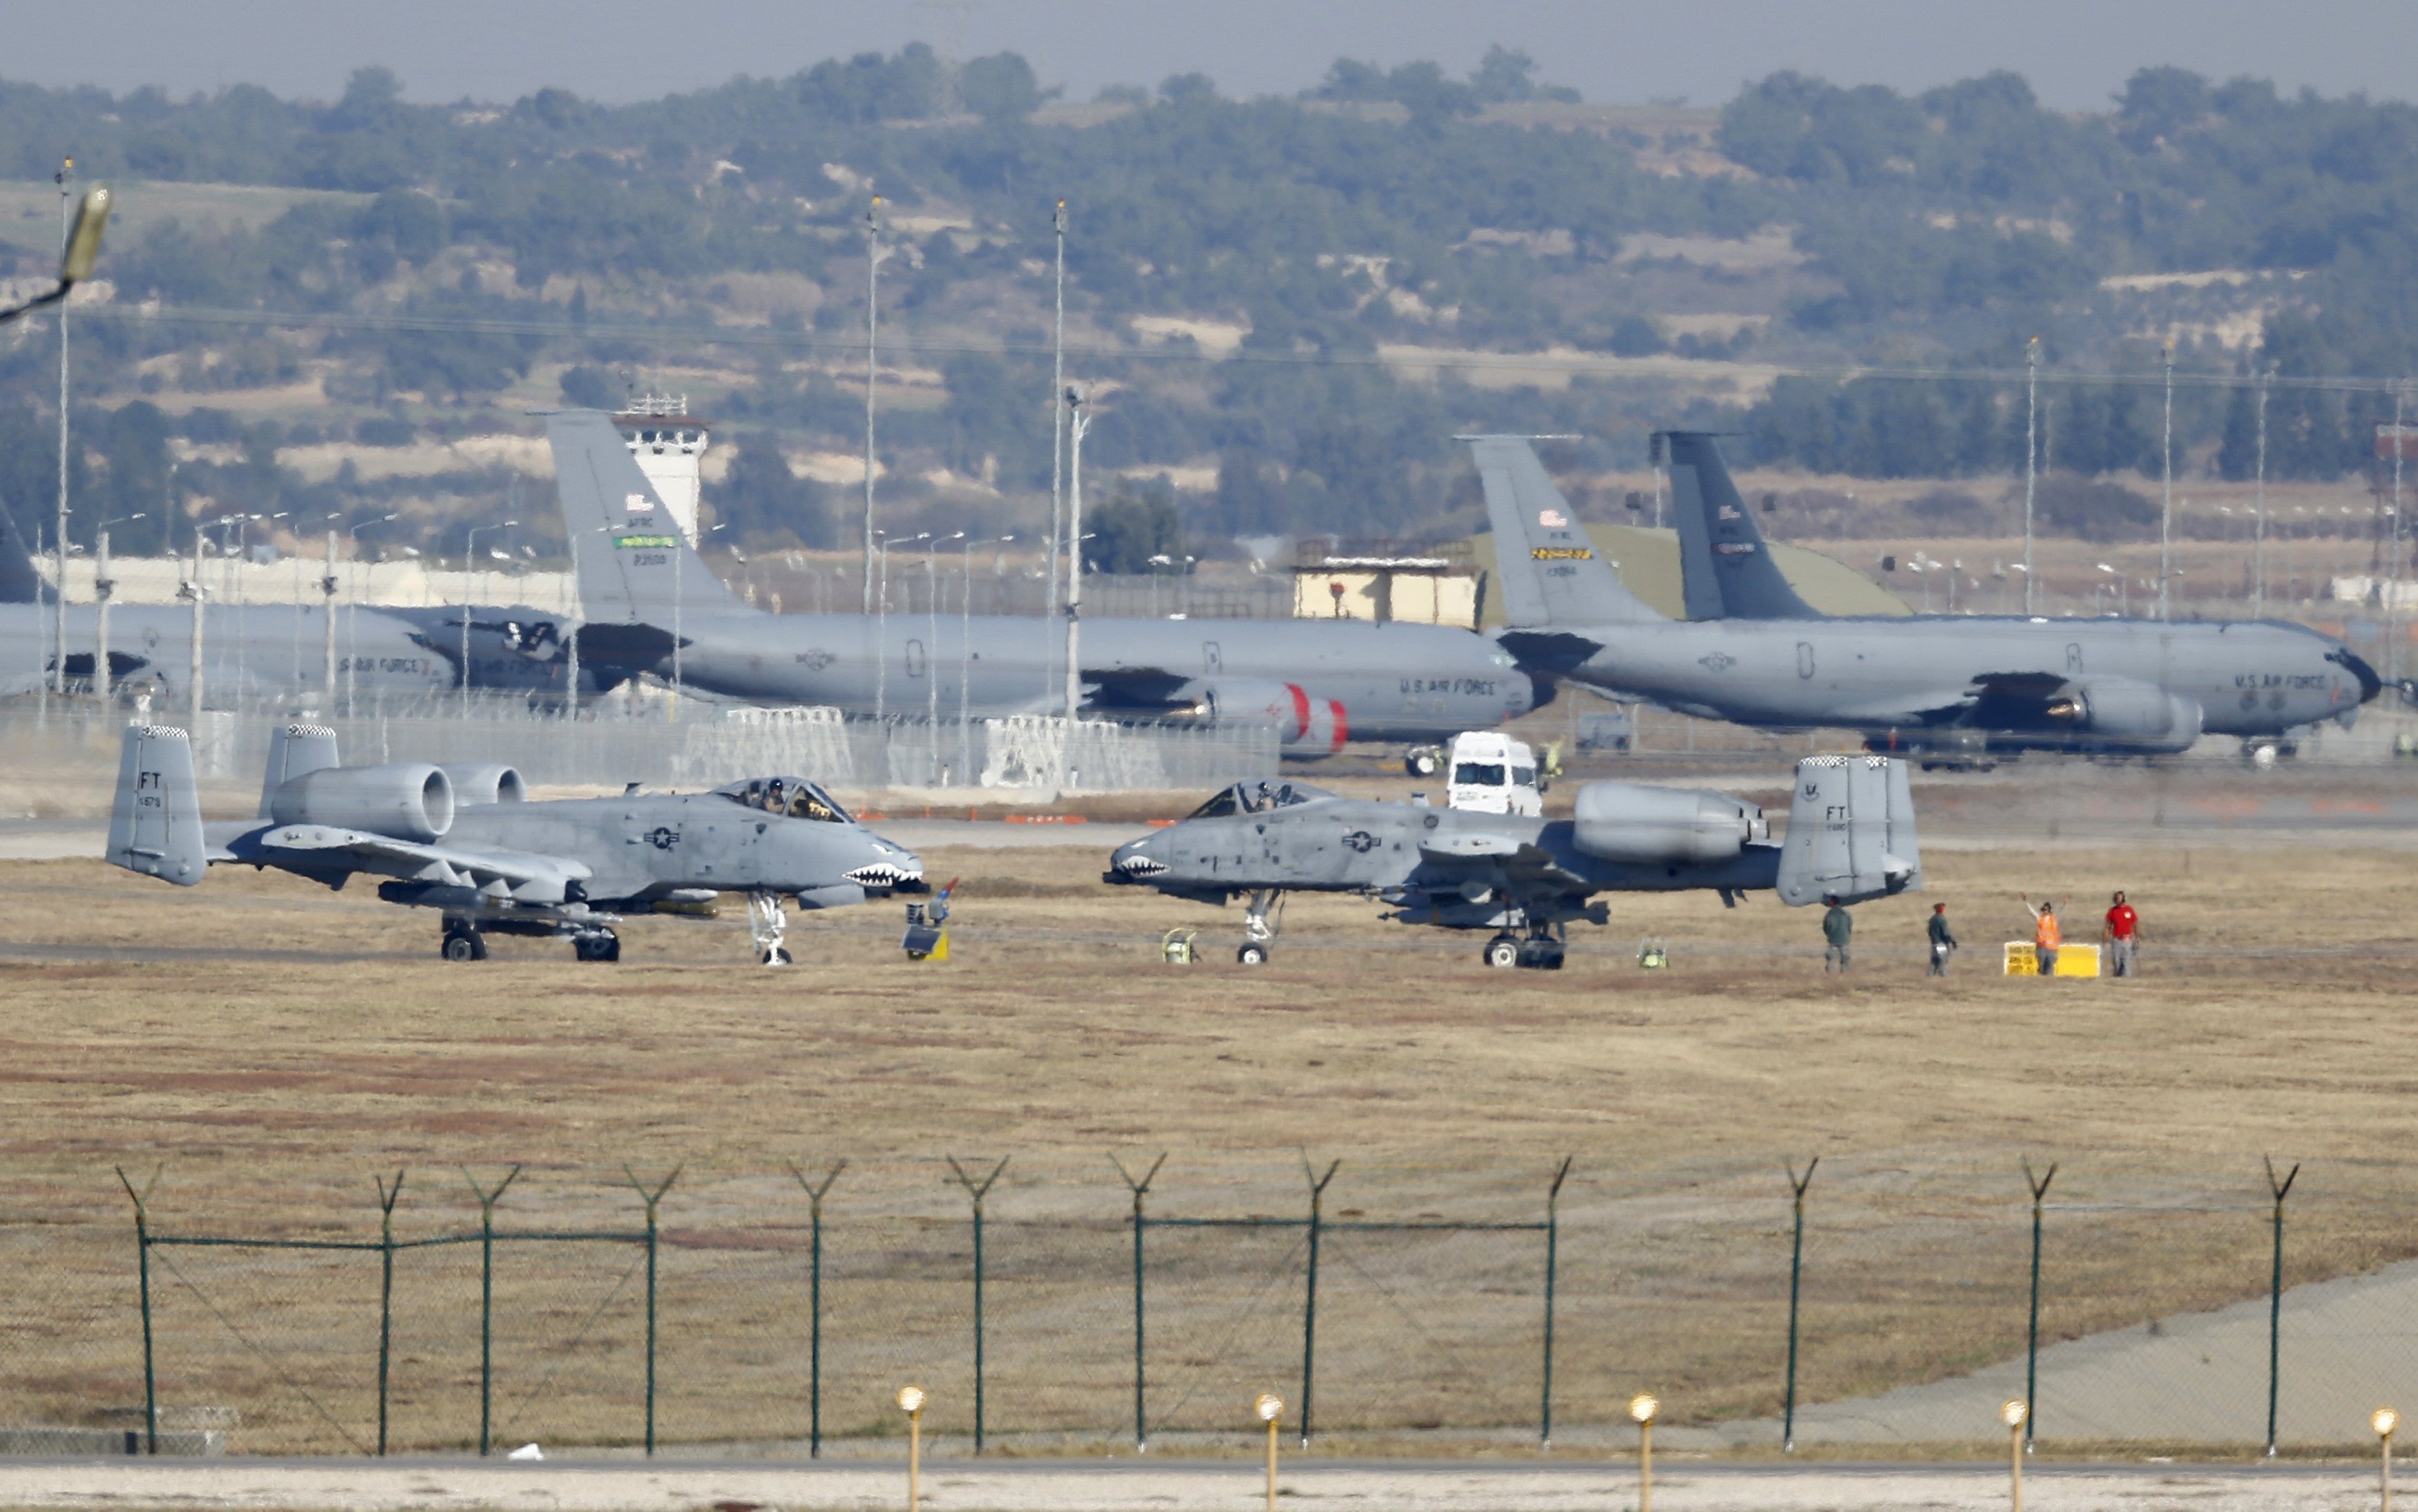 Turkey Blocks Access to Airbase on Coup Suspicion, Hurriyet Says